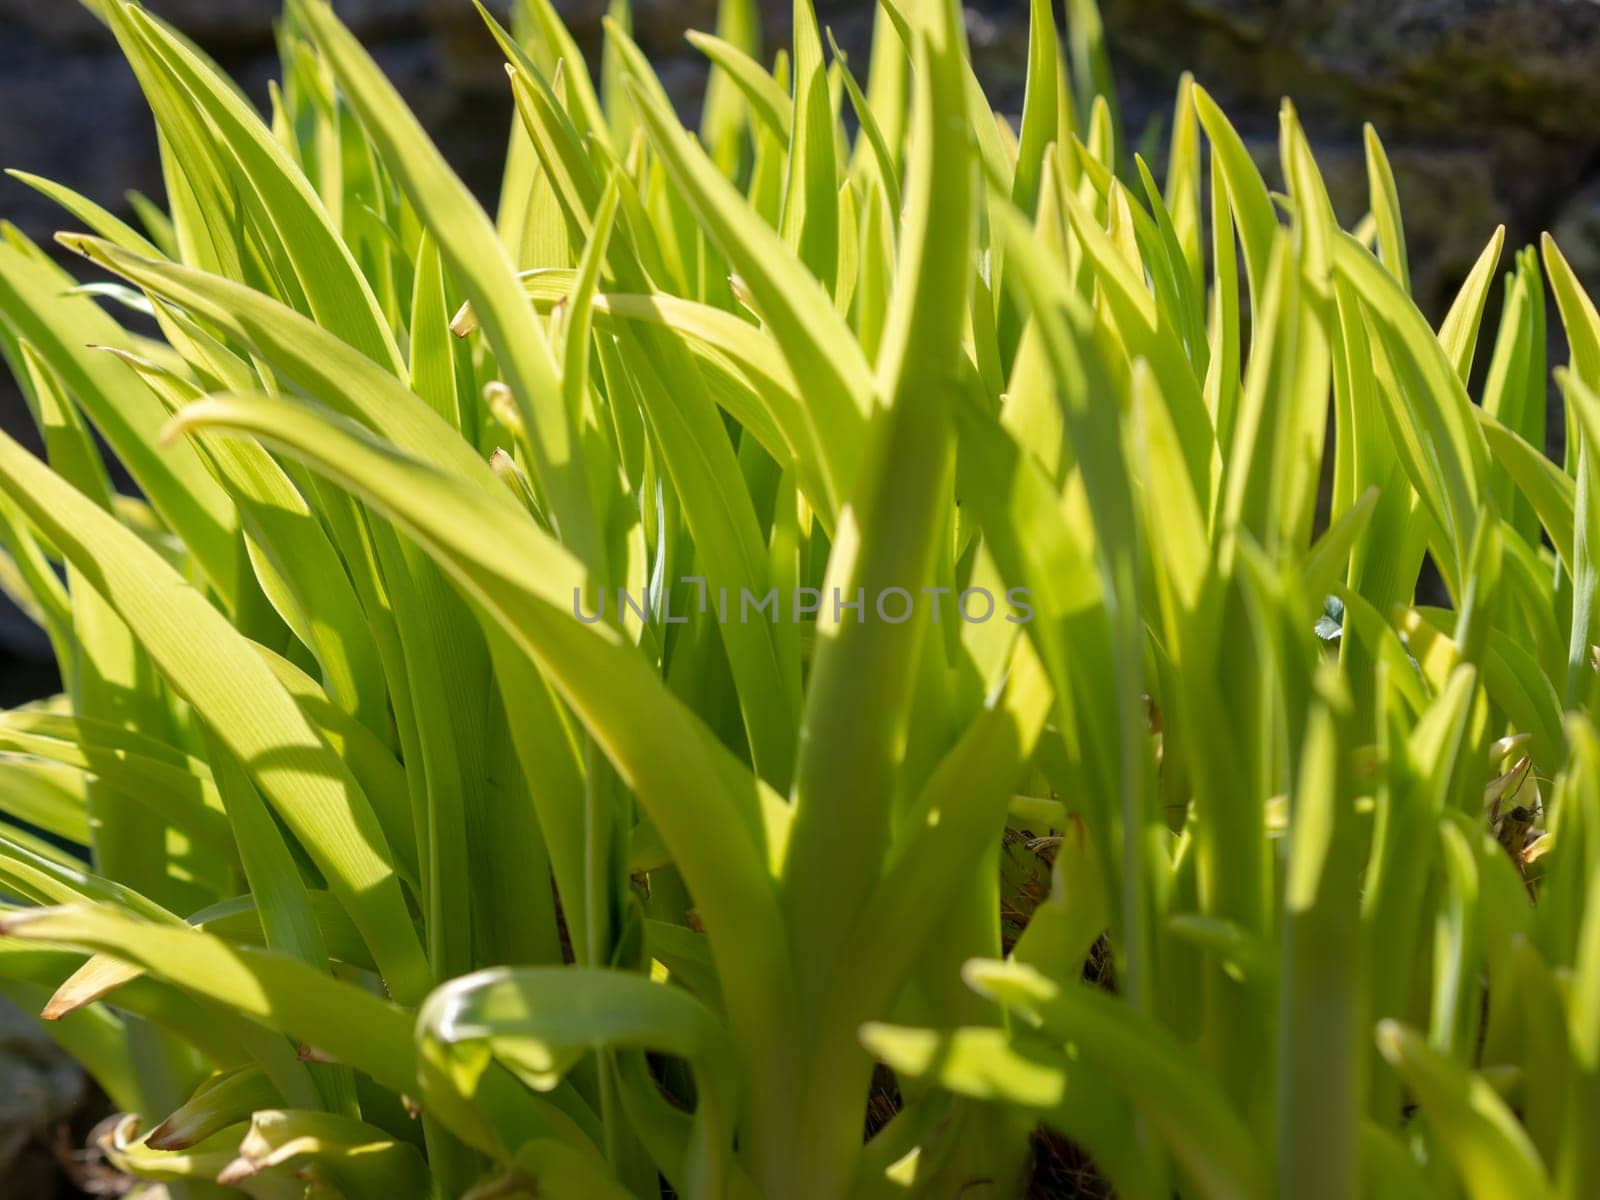 Green grass background texture. Field of fresh green grass texture as a background by Andre1ns